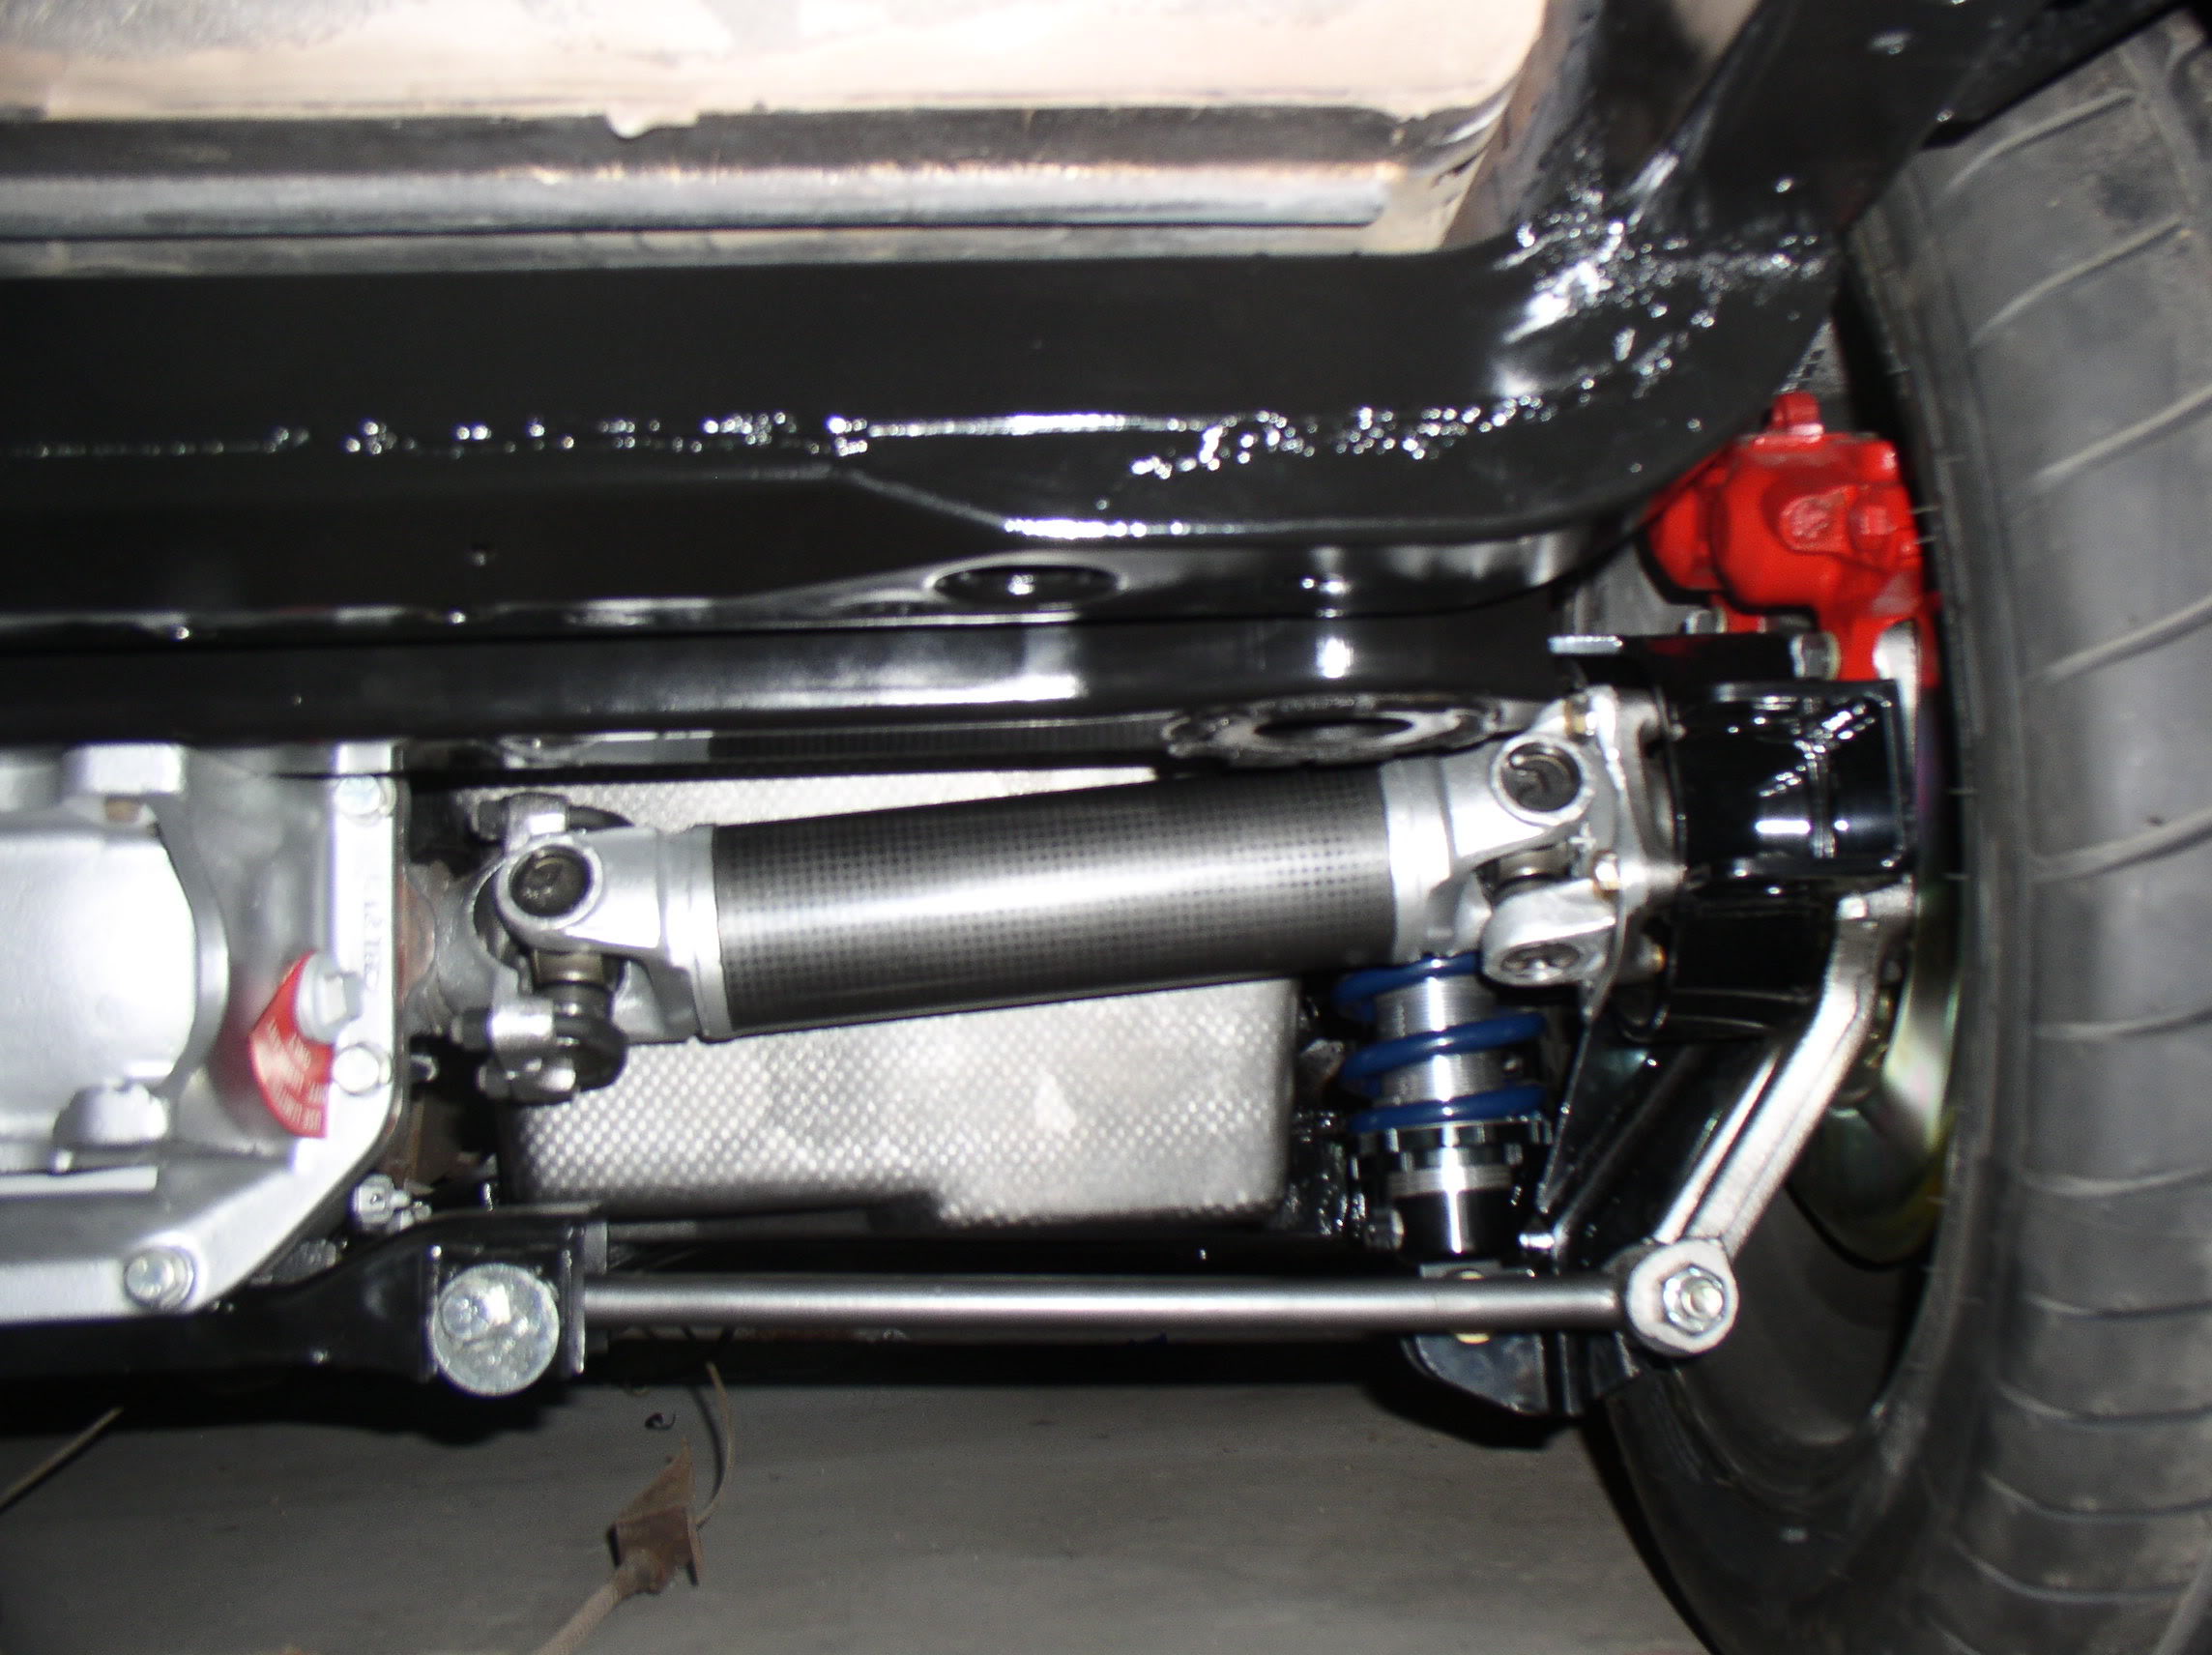 c3 corvette rear suspension upgrade.